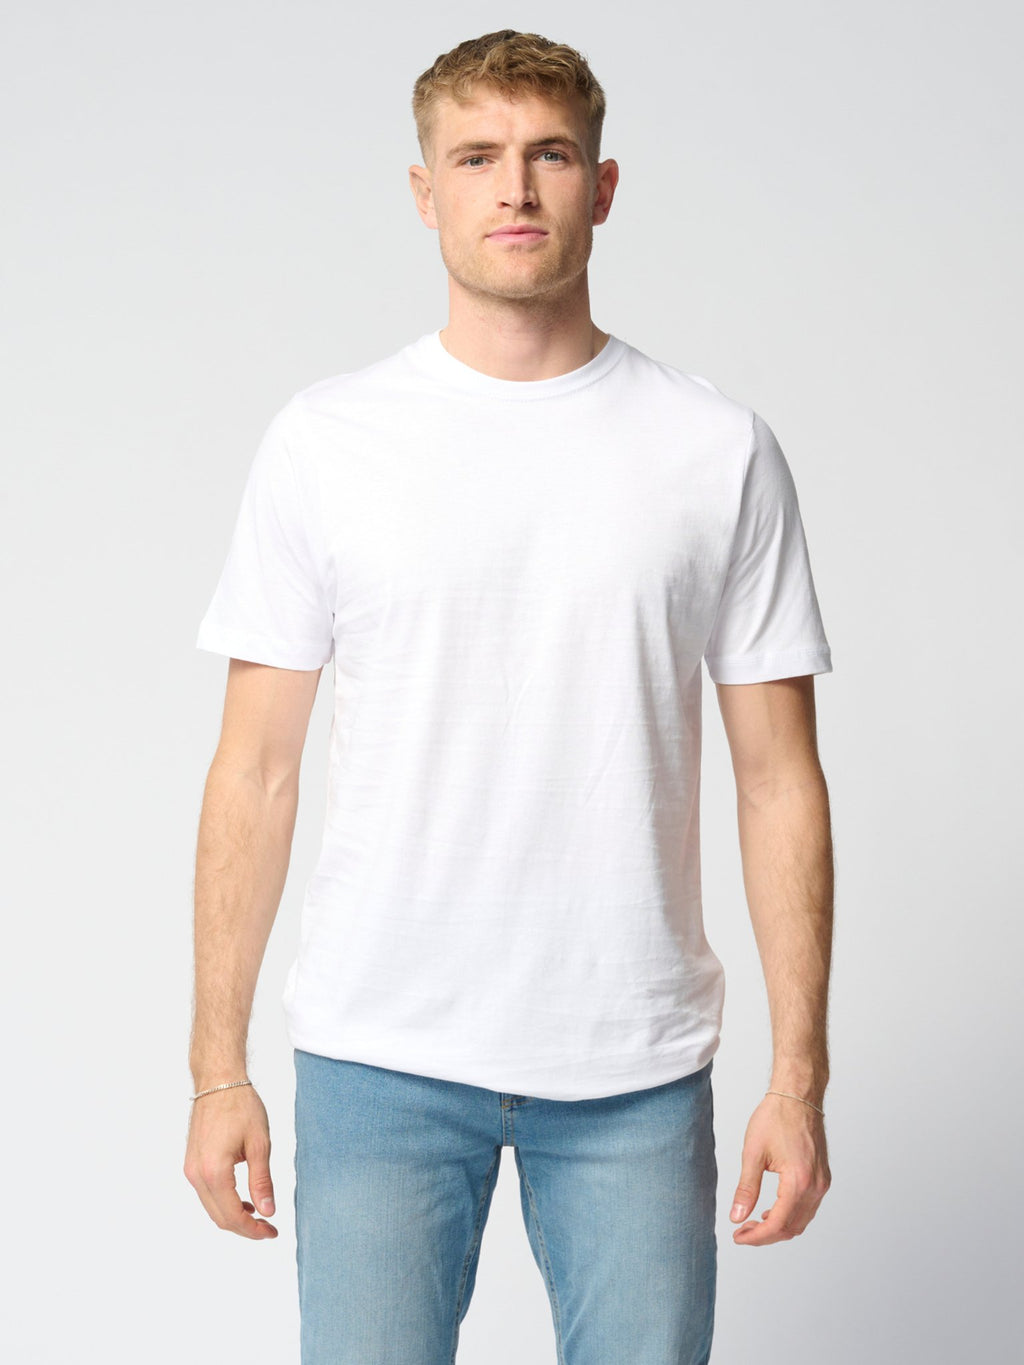 Organic Basic T-Shirts – Package Deal (9 pcs.) (FB)